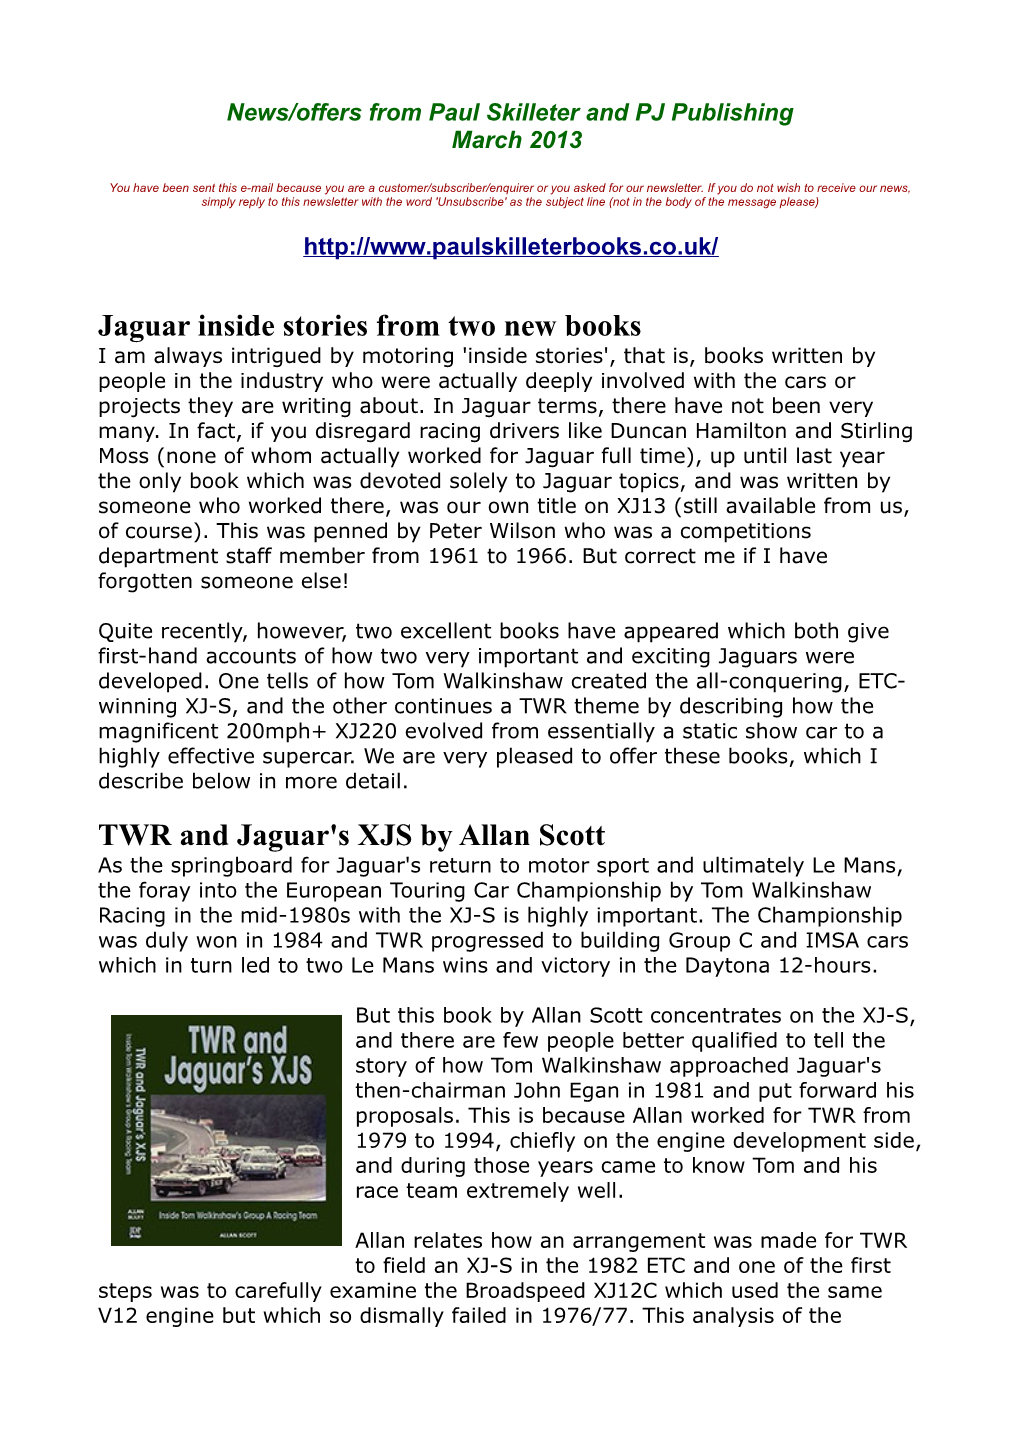 Jaguar Inside Stories from Two New Books TWR and Jaguar's XJS by Allan Scott